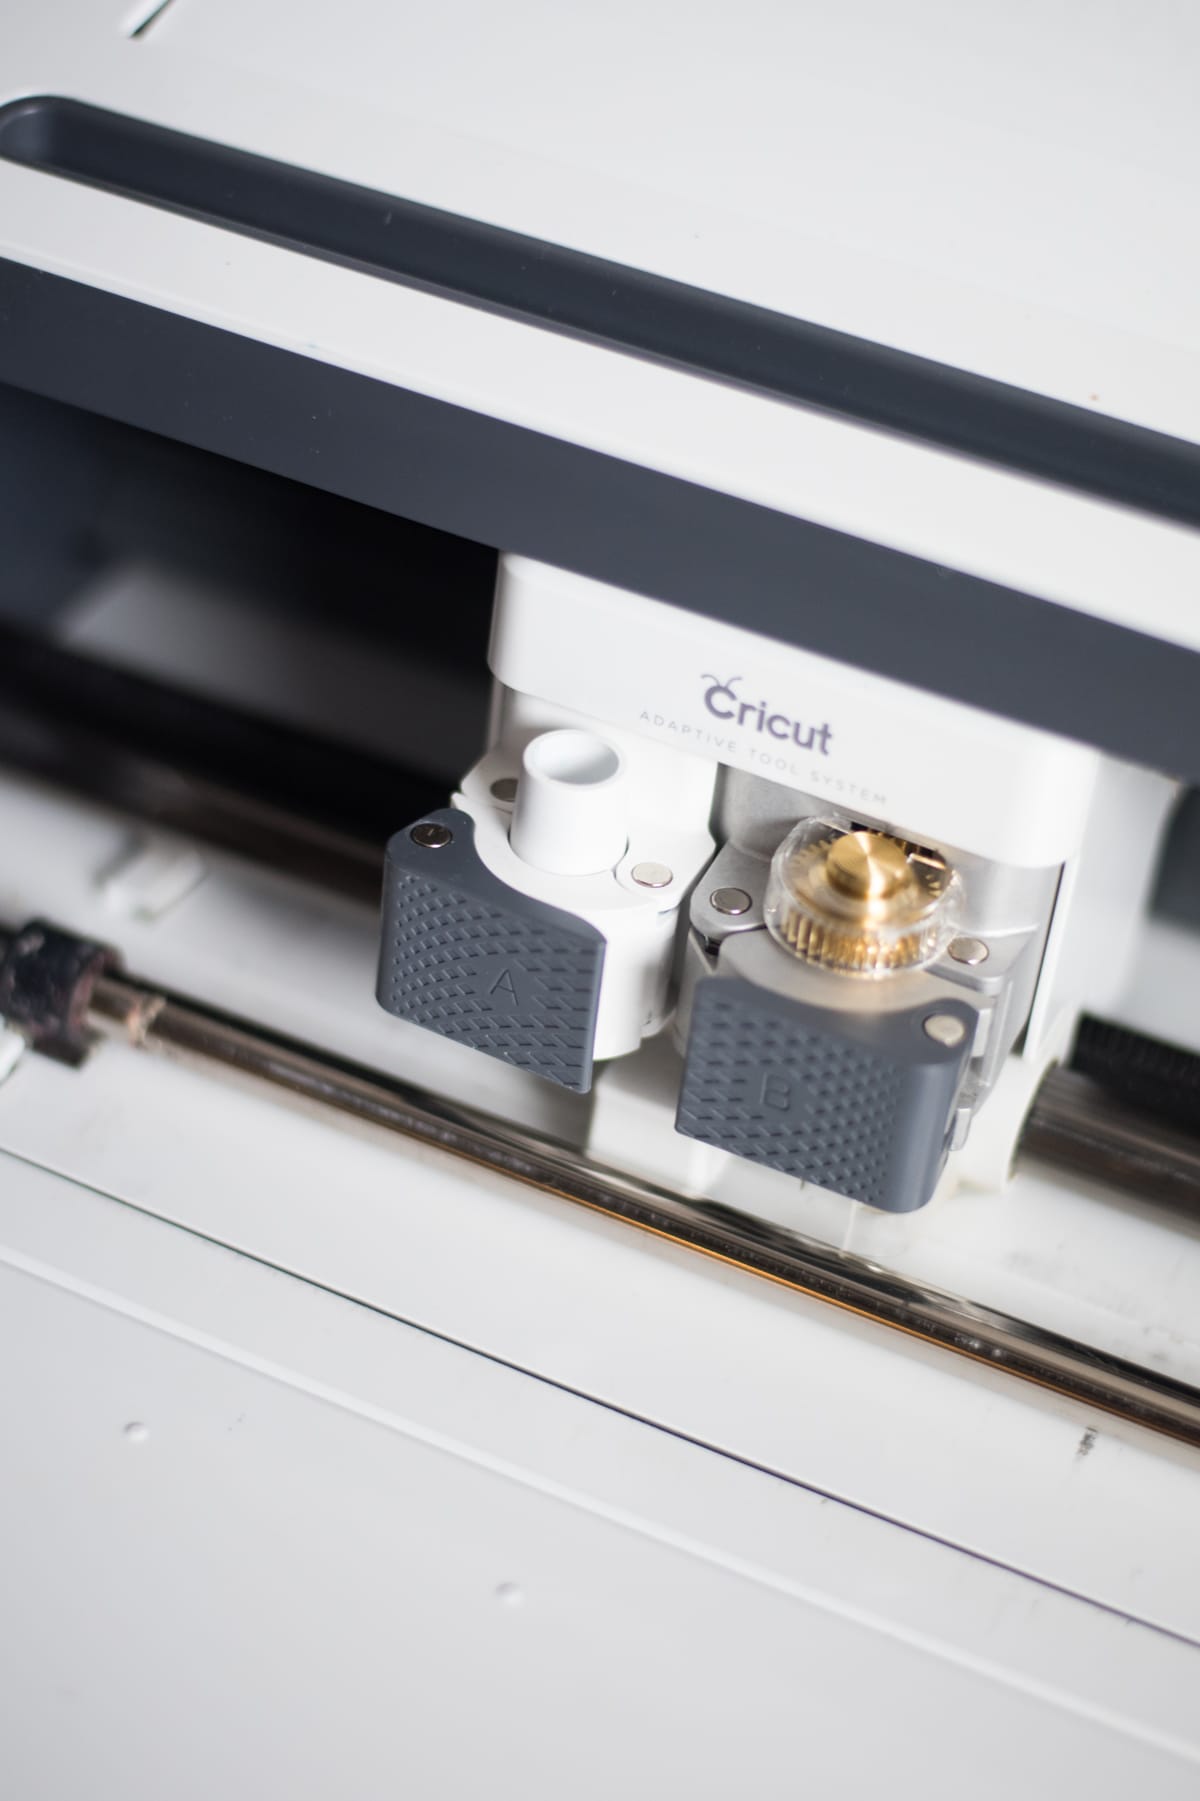 Cricut adaptive tool system